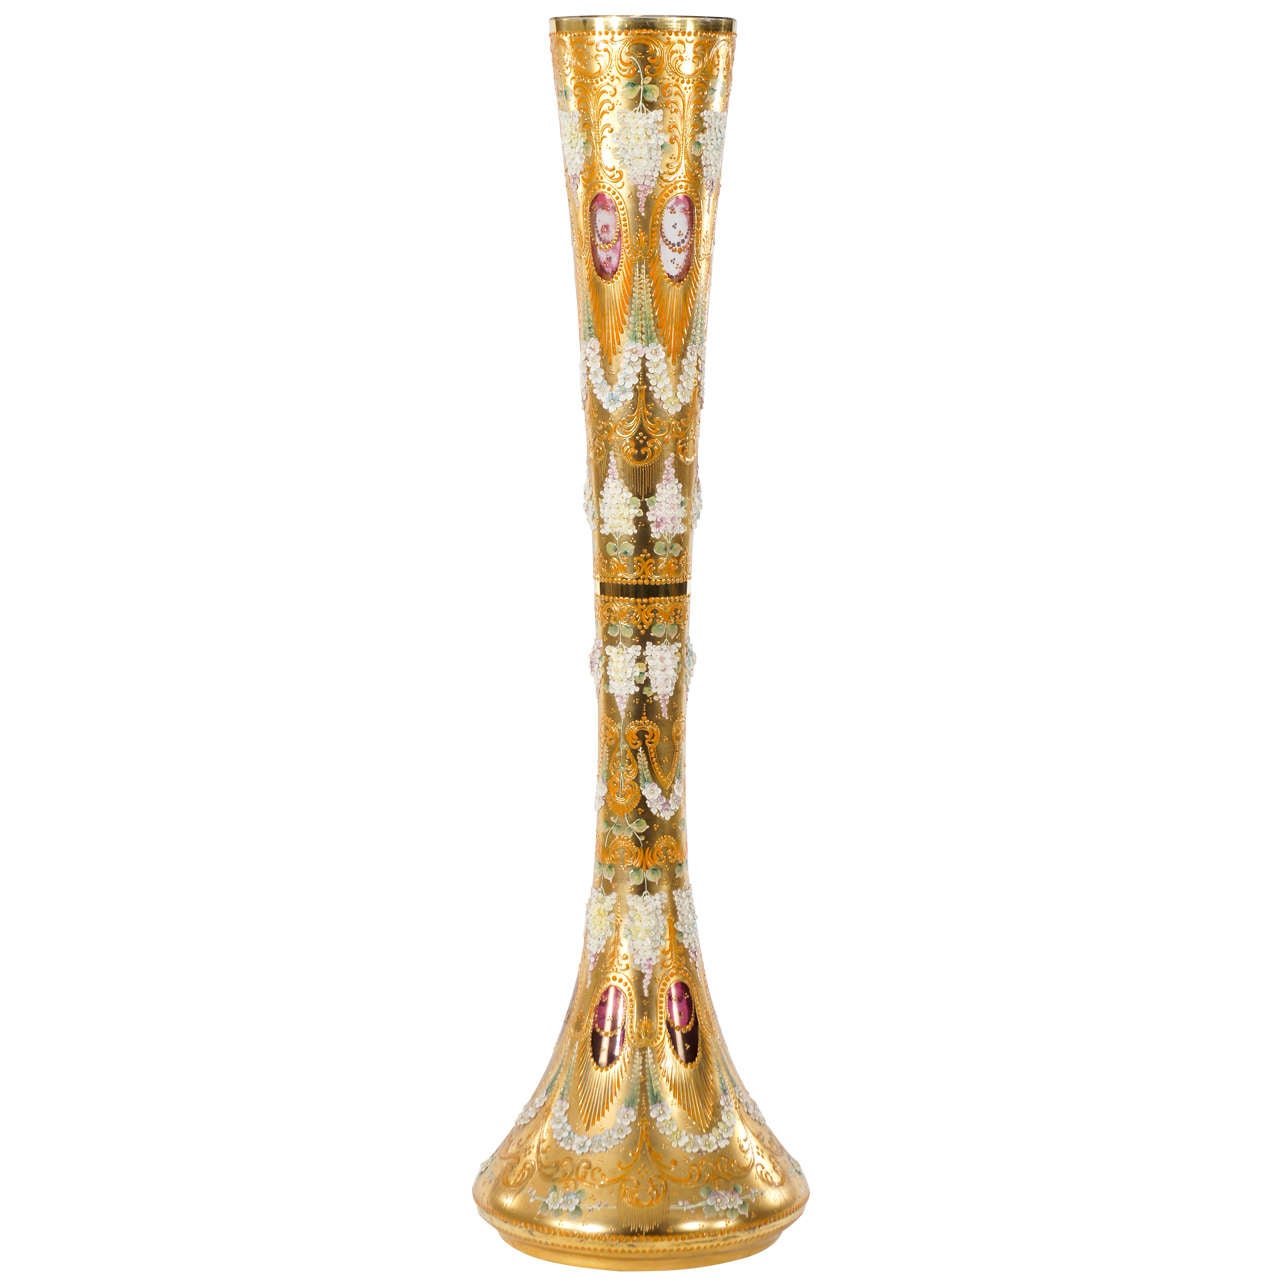 Monumental Moser Floor Vase with Porcelain and Gilt Floral Decorations